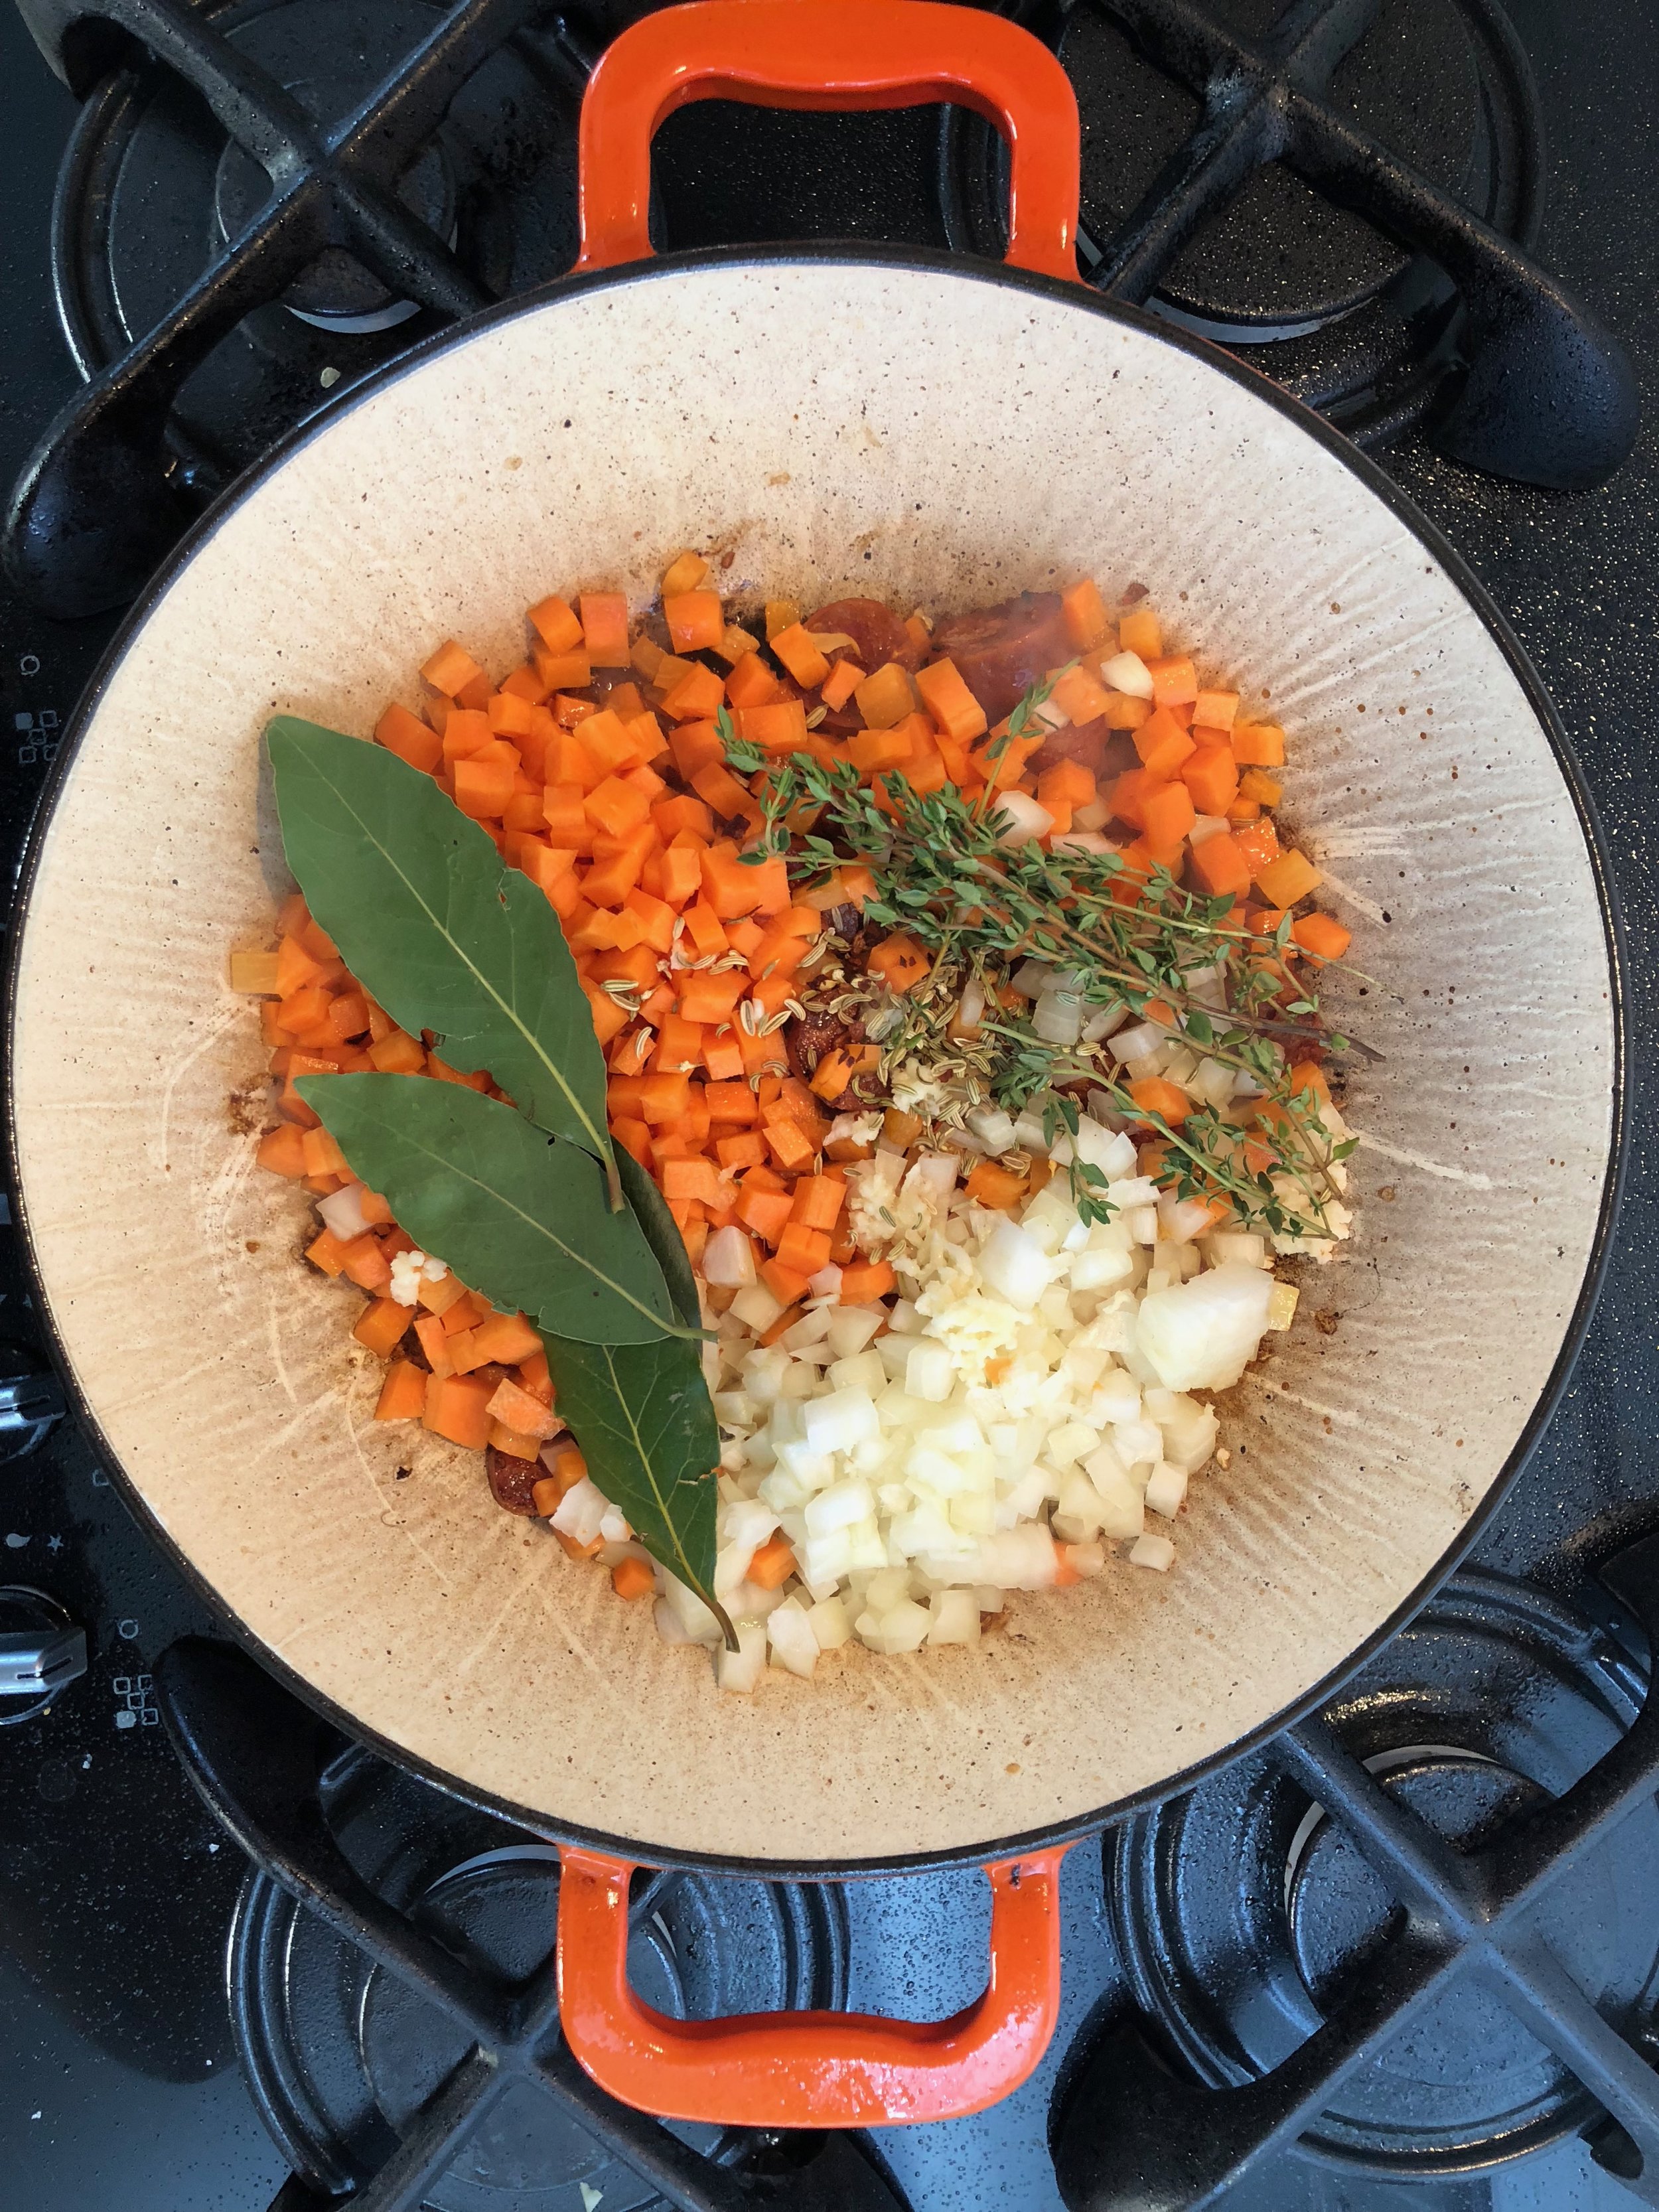 Add the veg, herbs and garlic